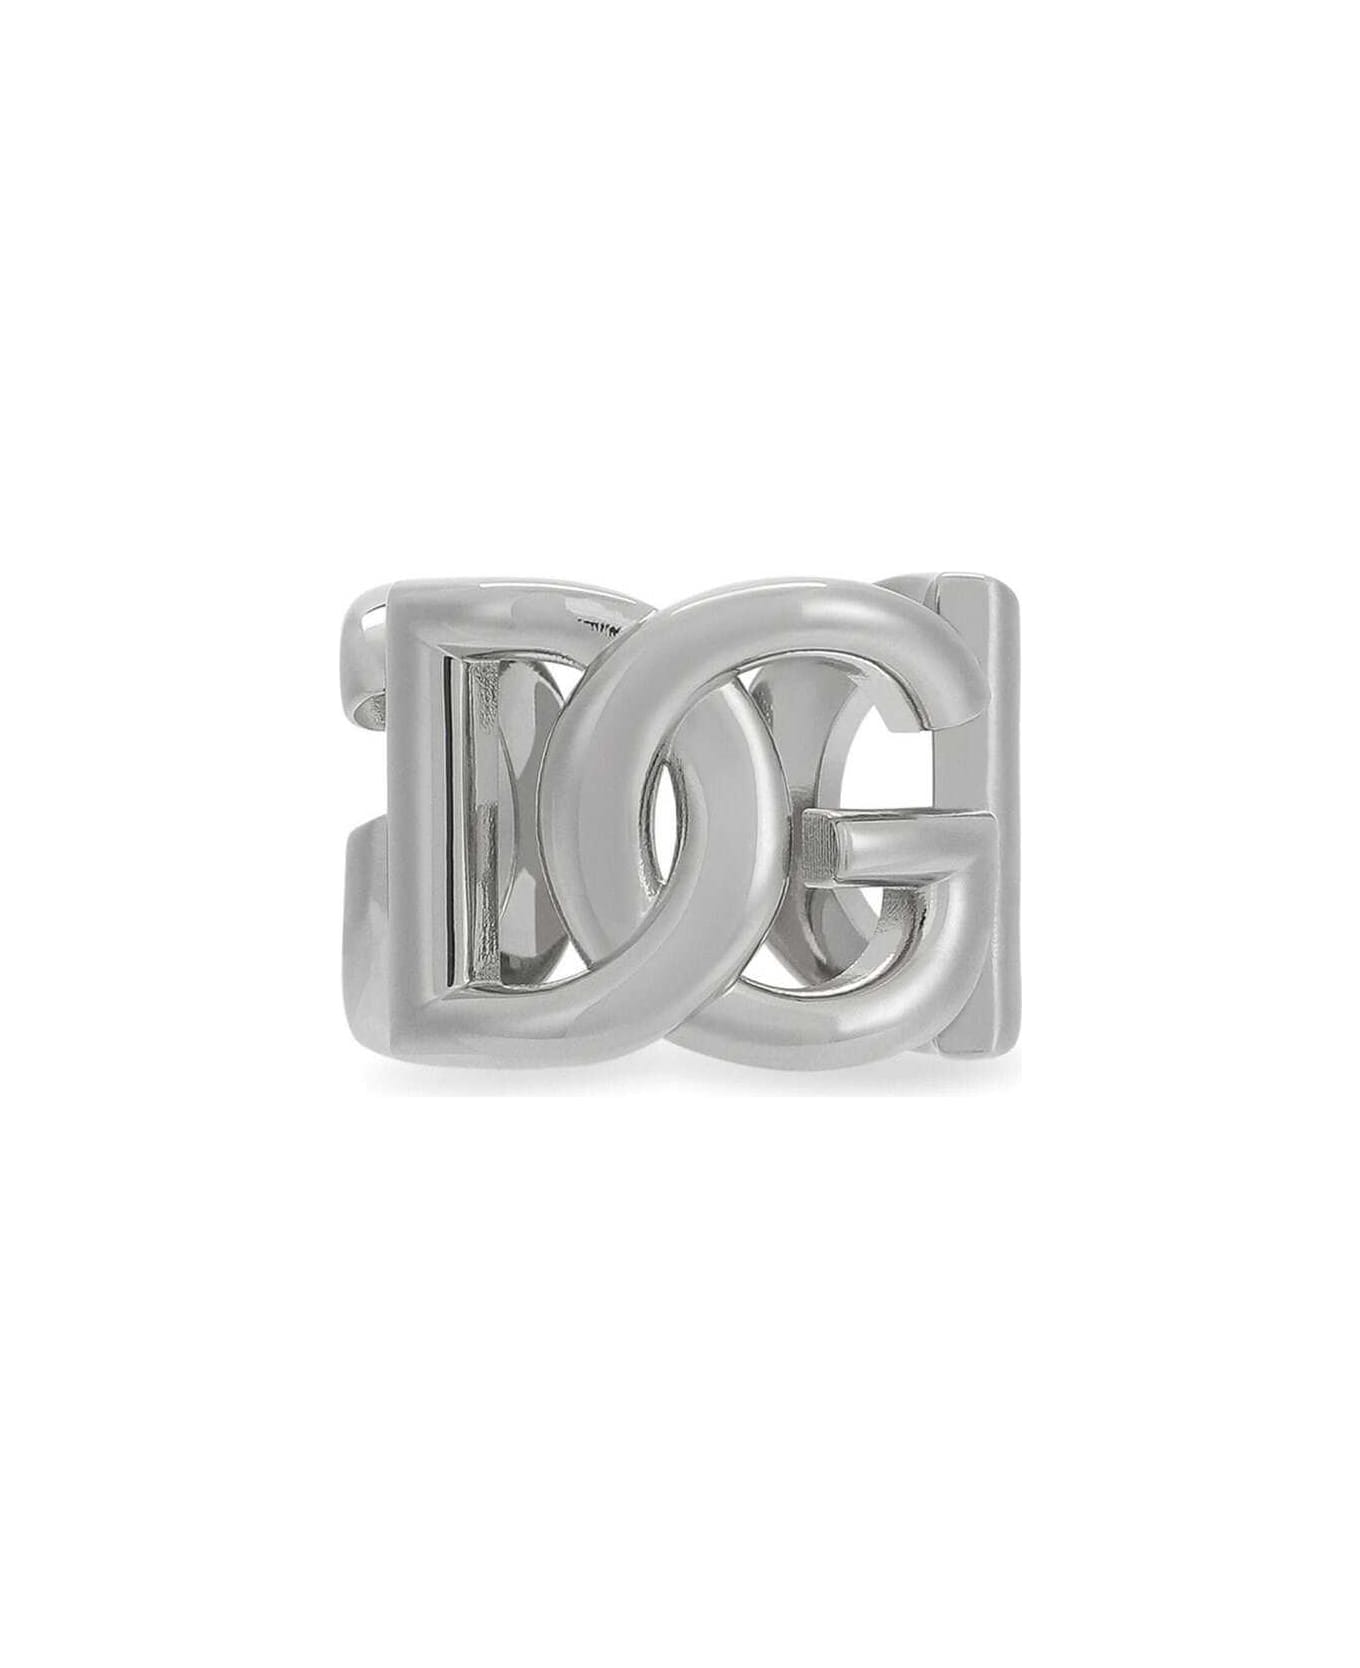 Dolce & Gabbana Anello Logo - Metallic